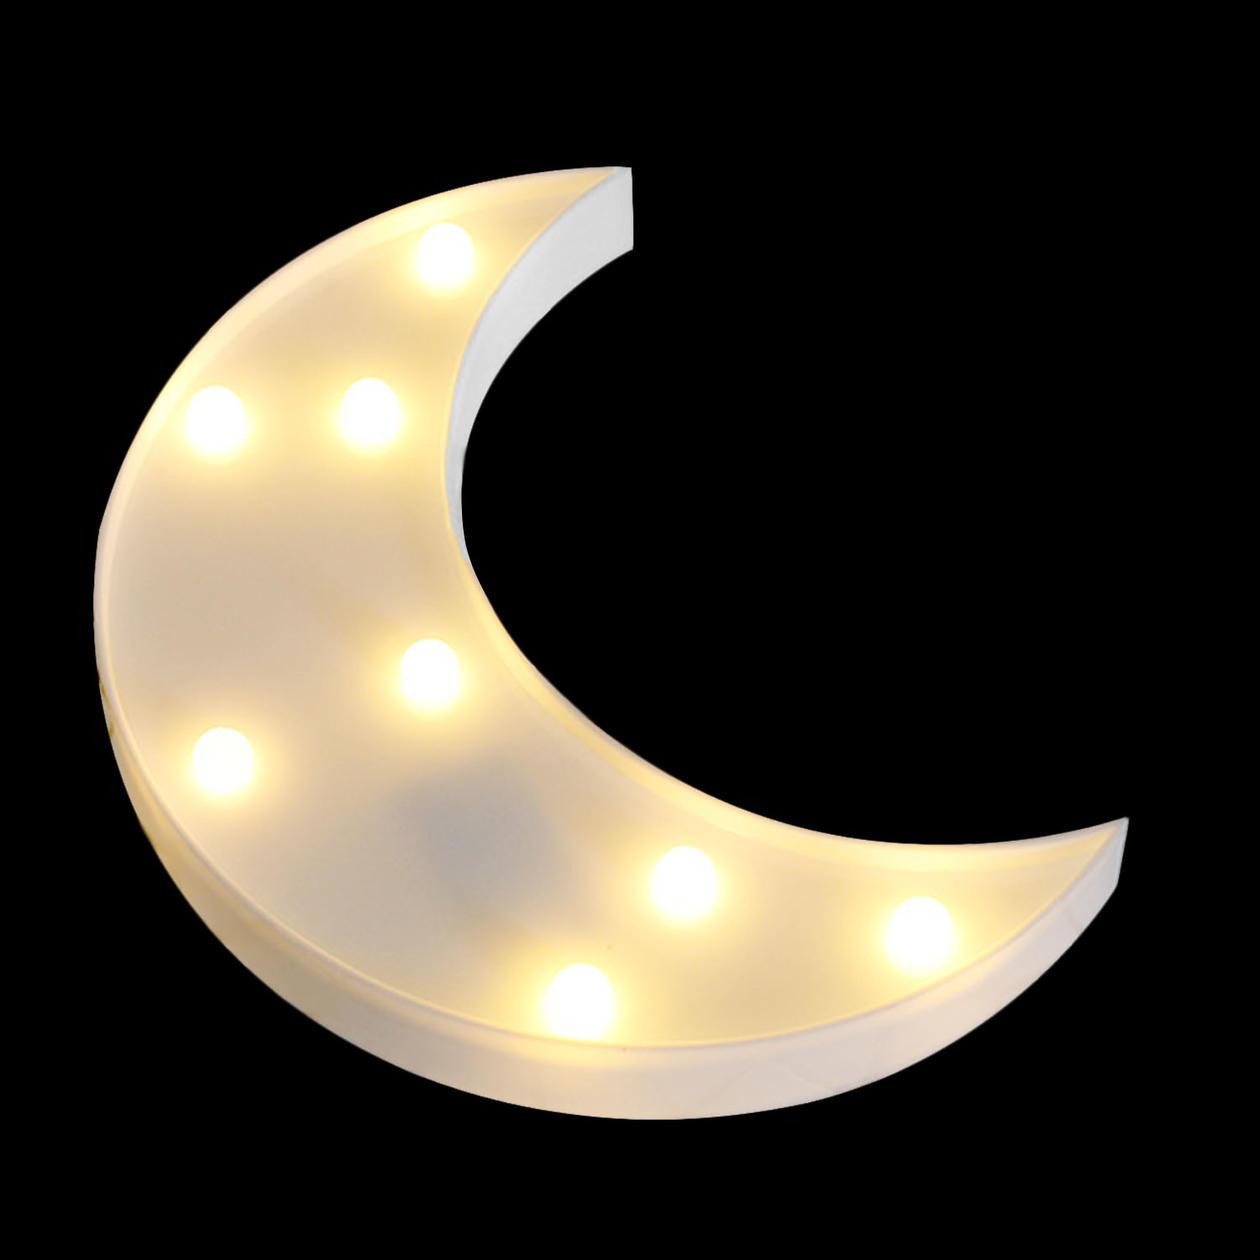 Декоративный LED светильник ночник Месяц CG Funny Lamp Moon